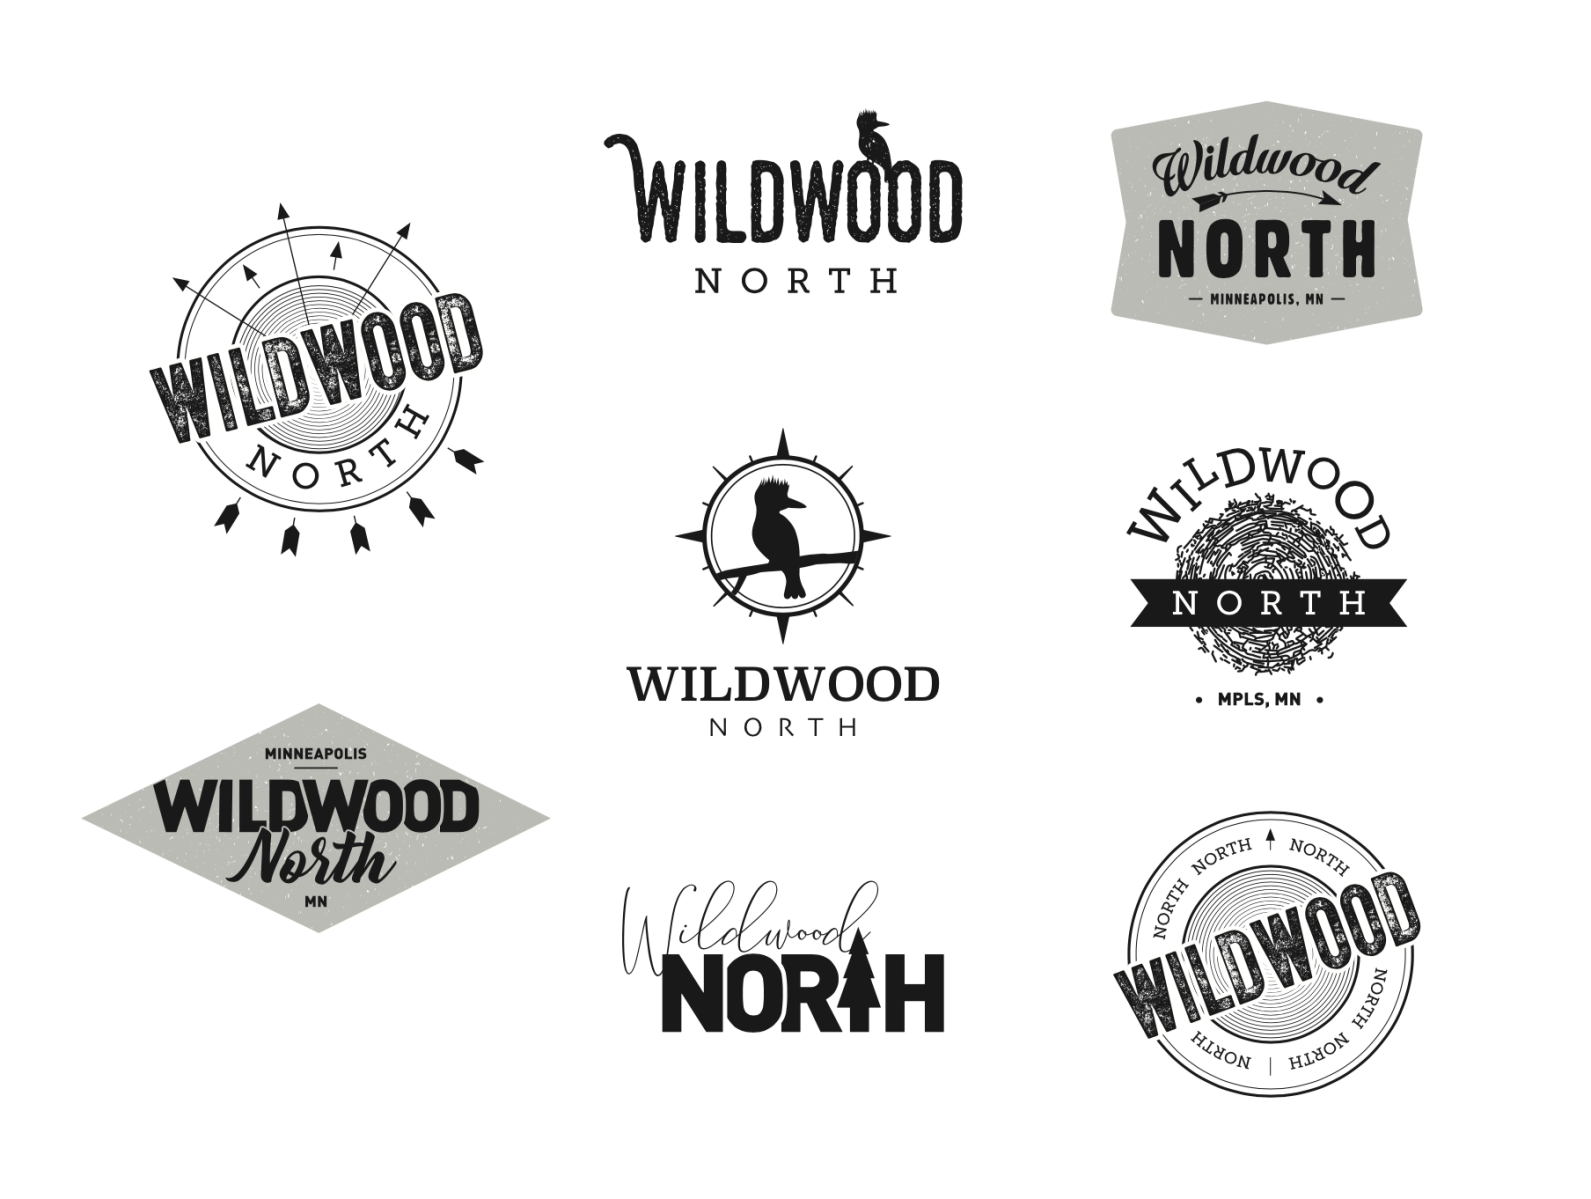 Wildwood North logo explorations by Jamie Braith on Dribbble